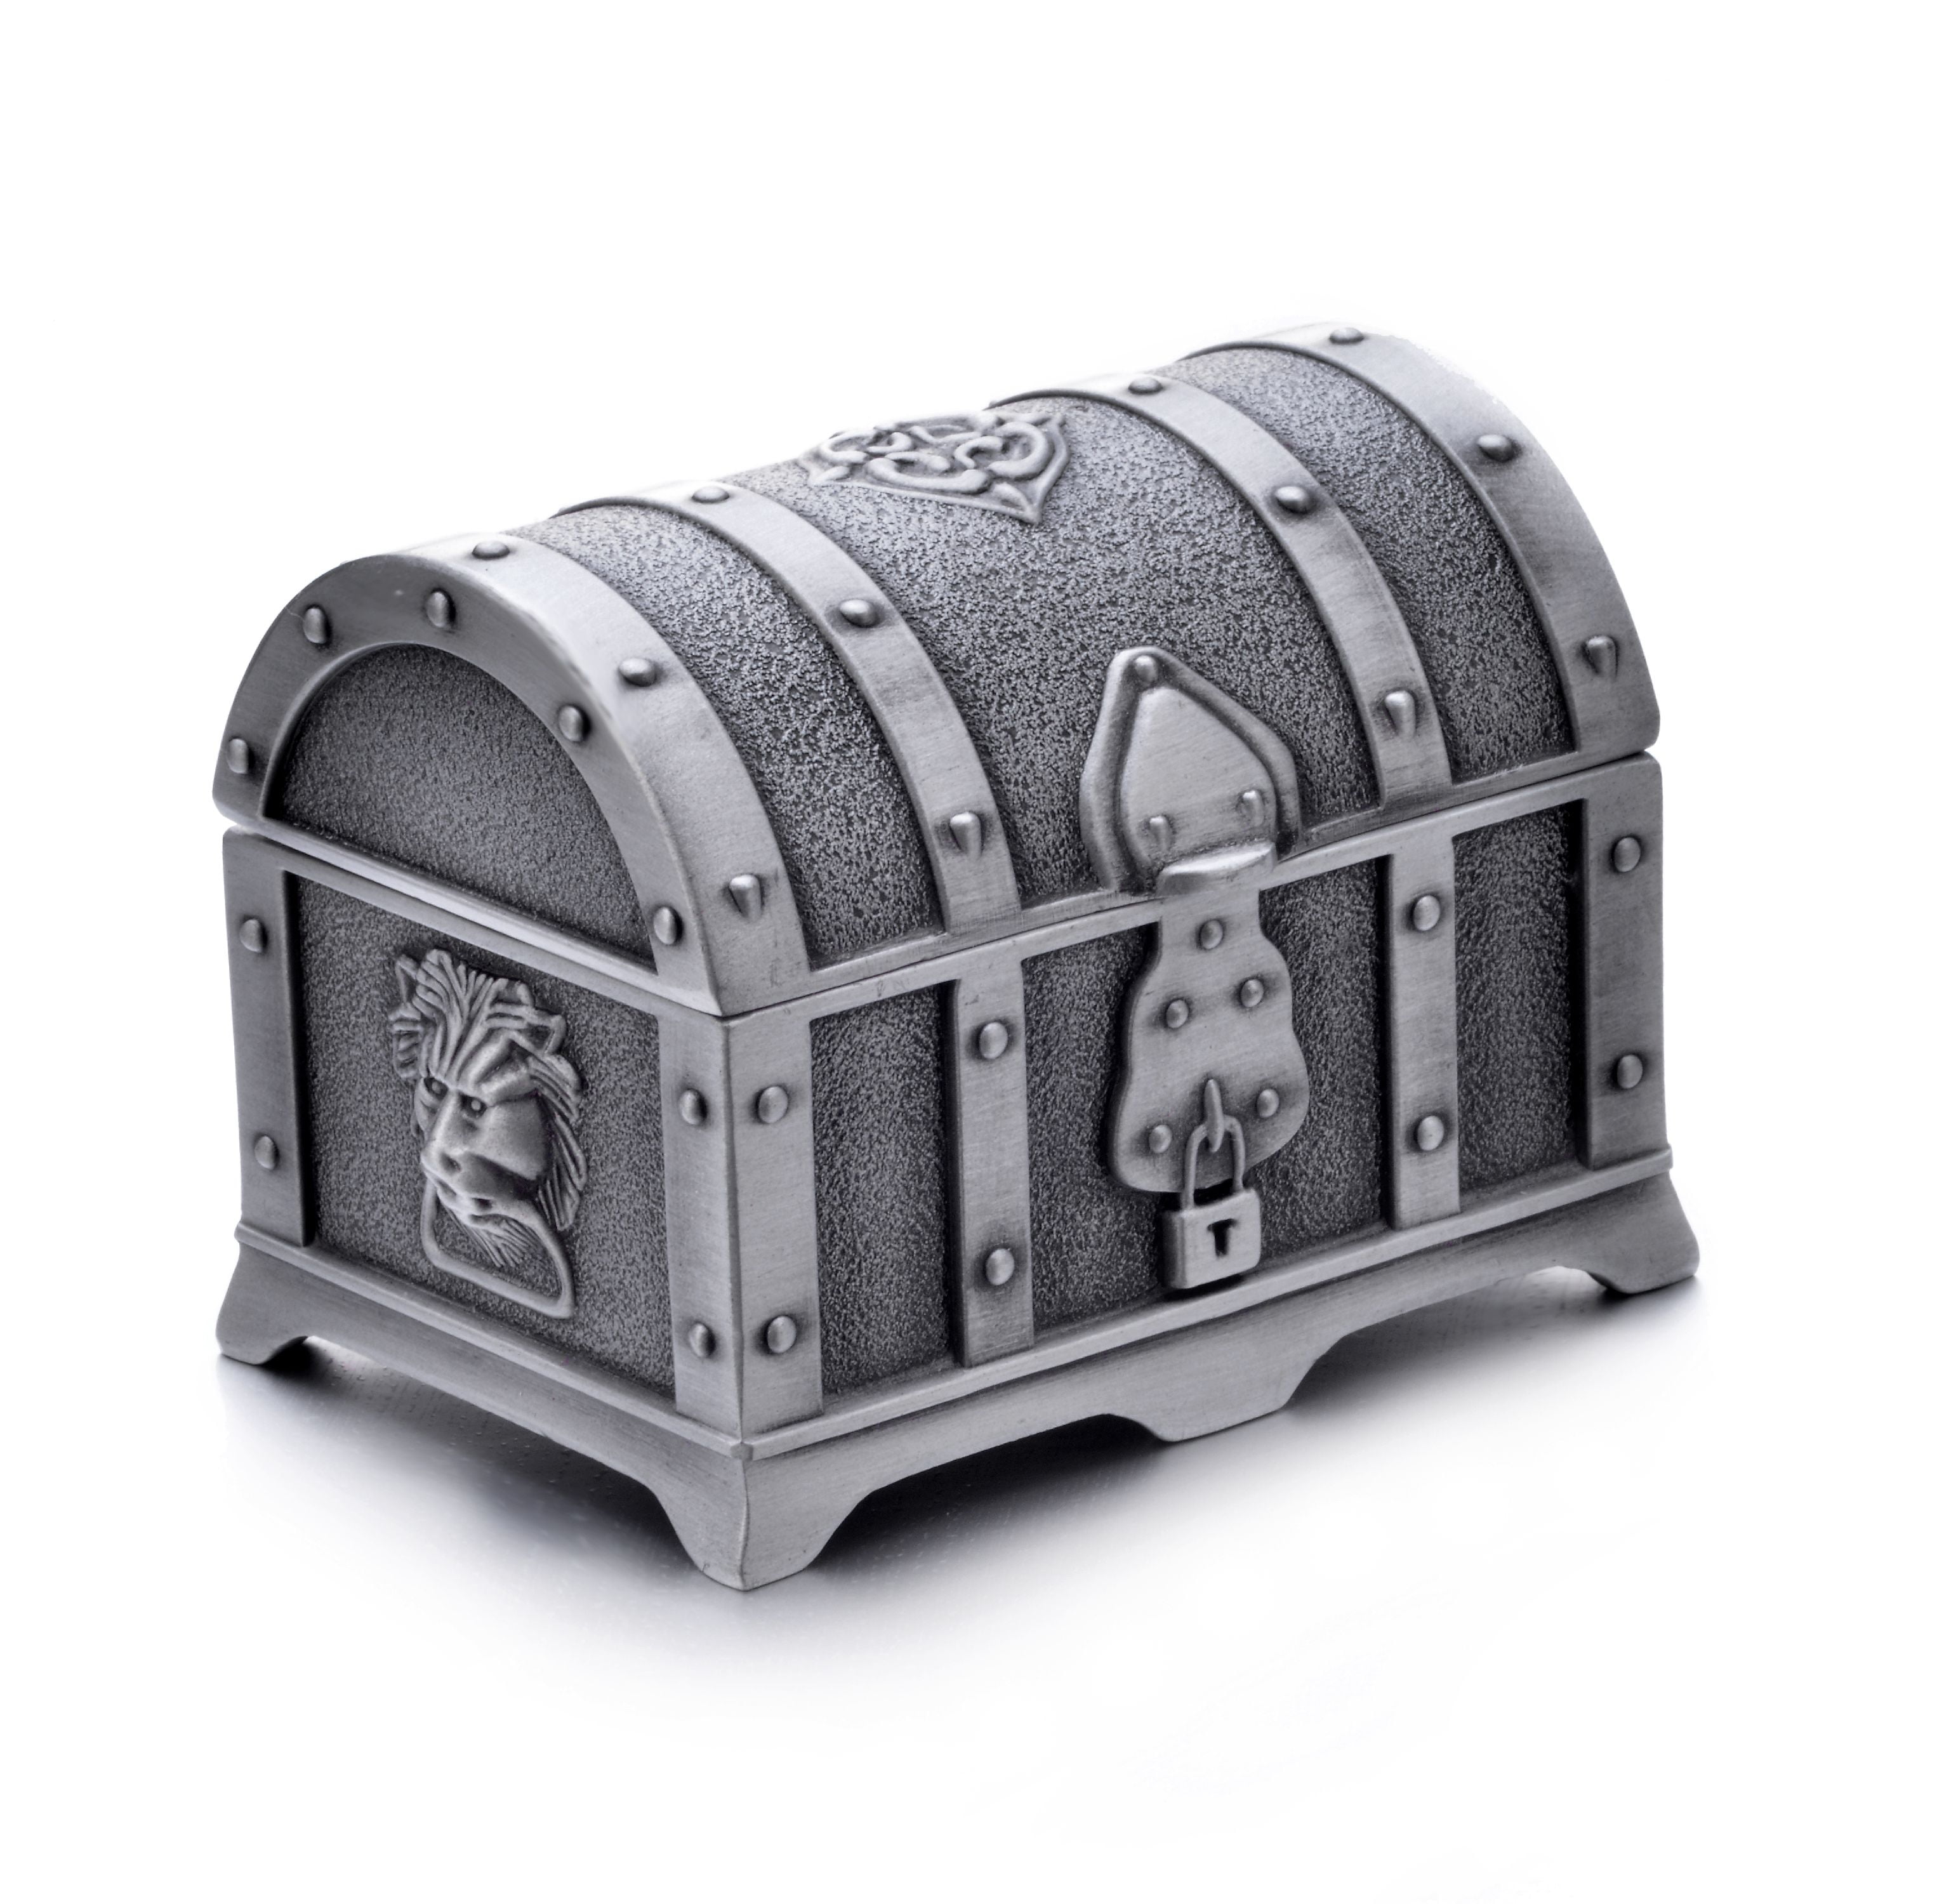 trinket box Vintage decorative storage box wooden treasure box Gift box. Jewelry chest Silver tool chest small storage chest